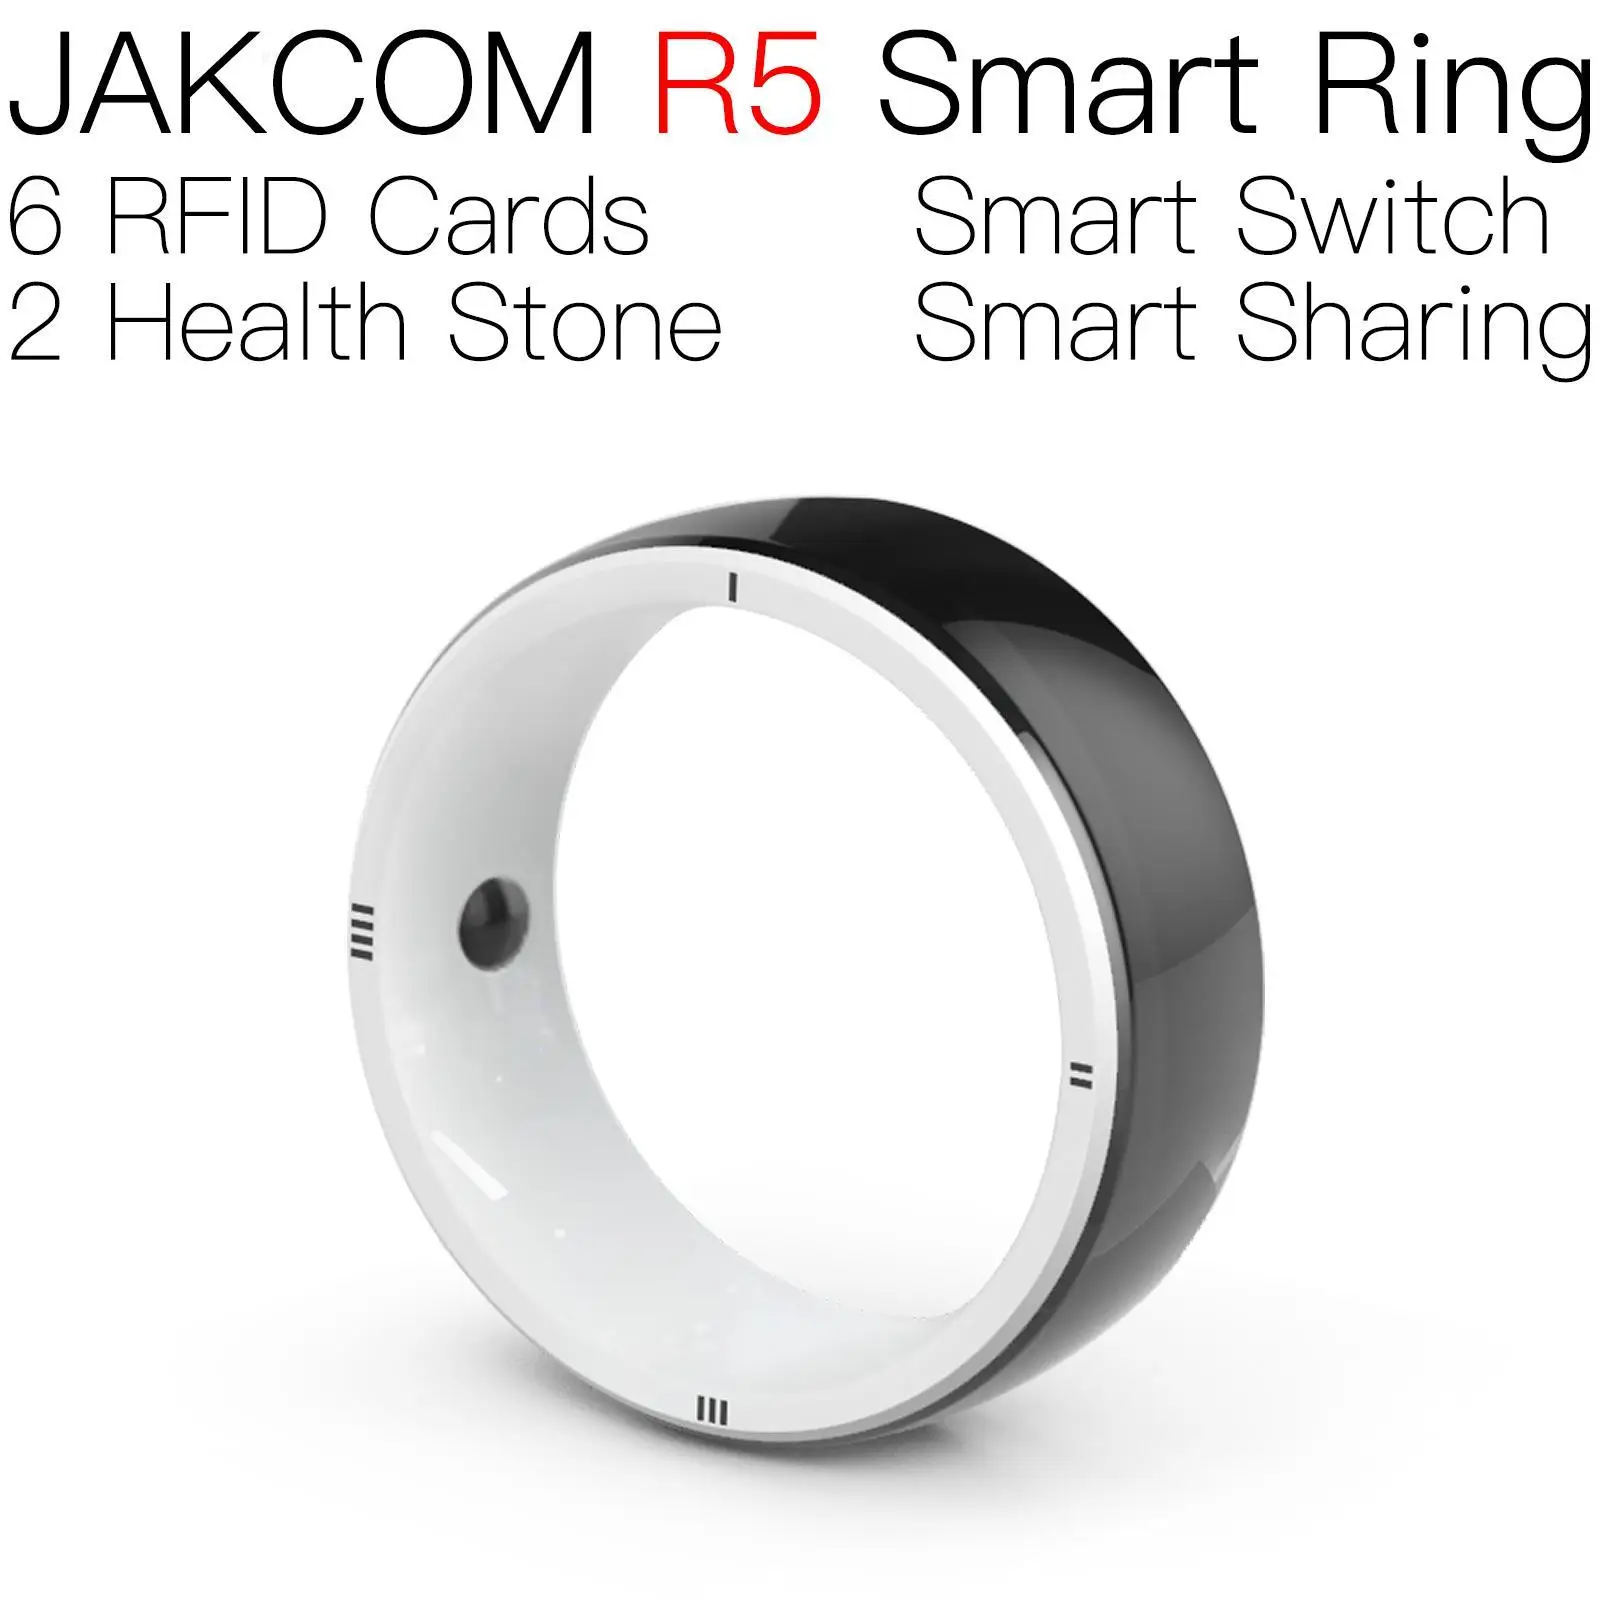 

JAKCOM R5 Smart Ring Super value than tags de nfc card cloner 125khz tk4100 em4100 chip coil army id tag dealer dual ic uid